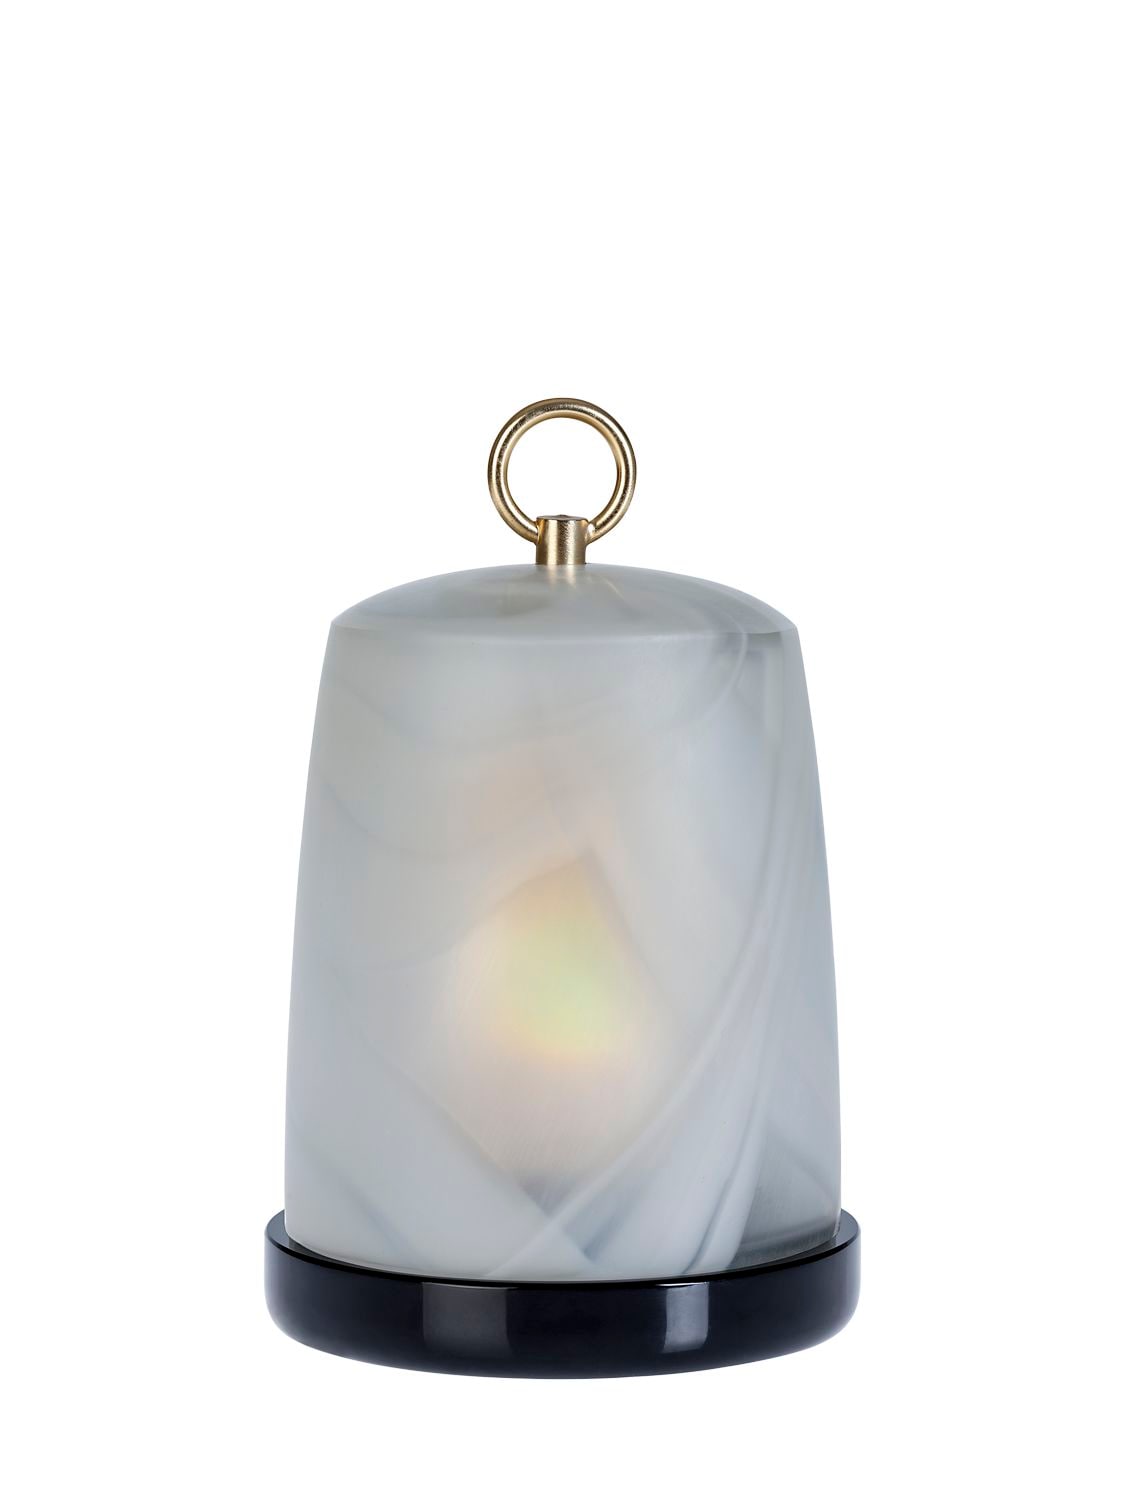 Armani/casa Hack Murano Glass Tealight Holder In Grey